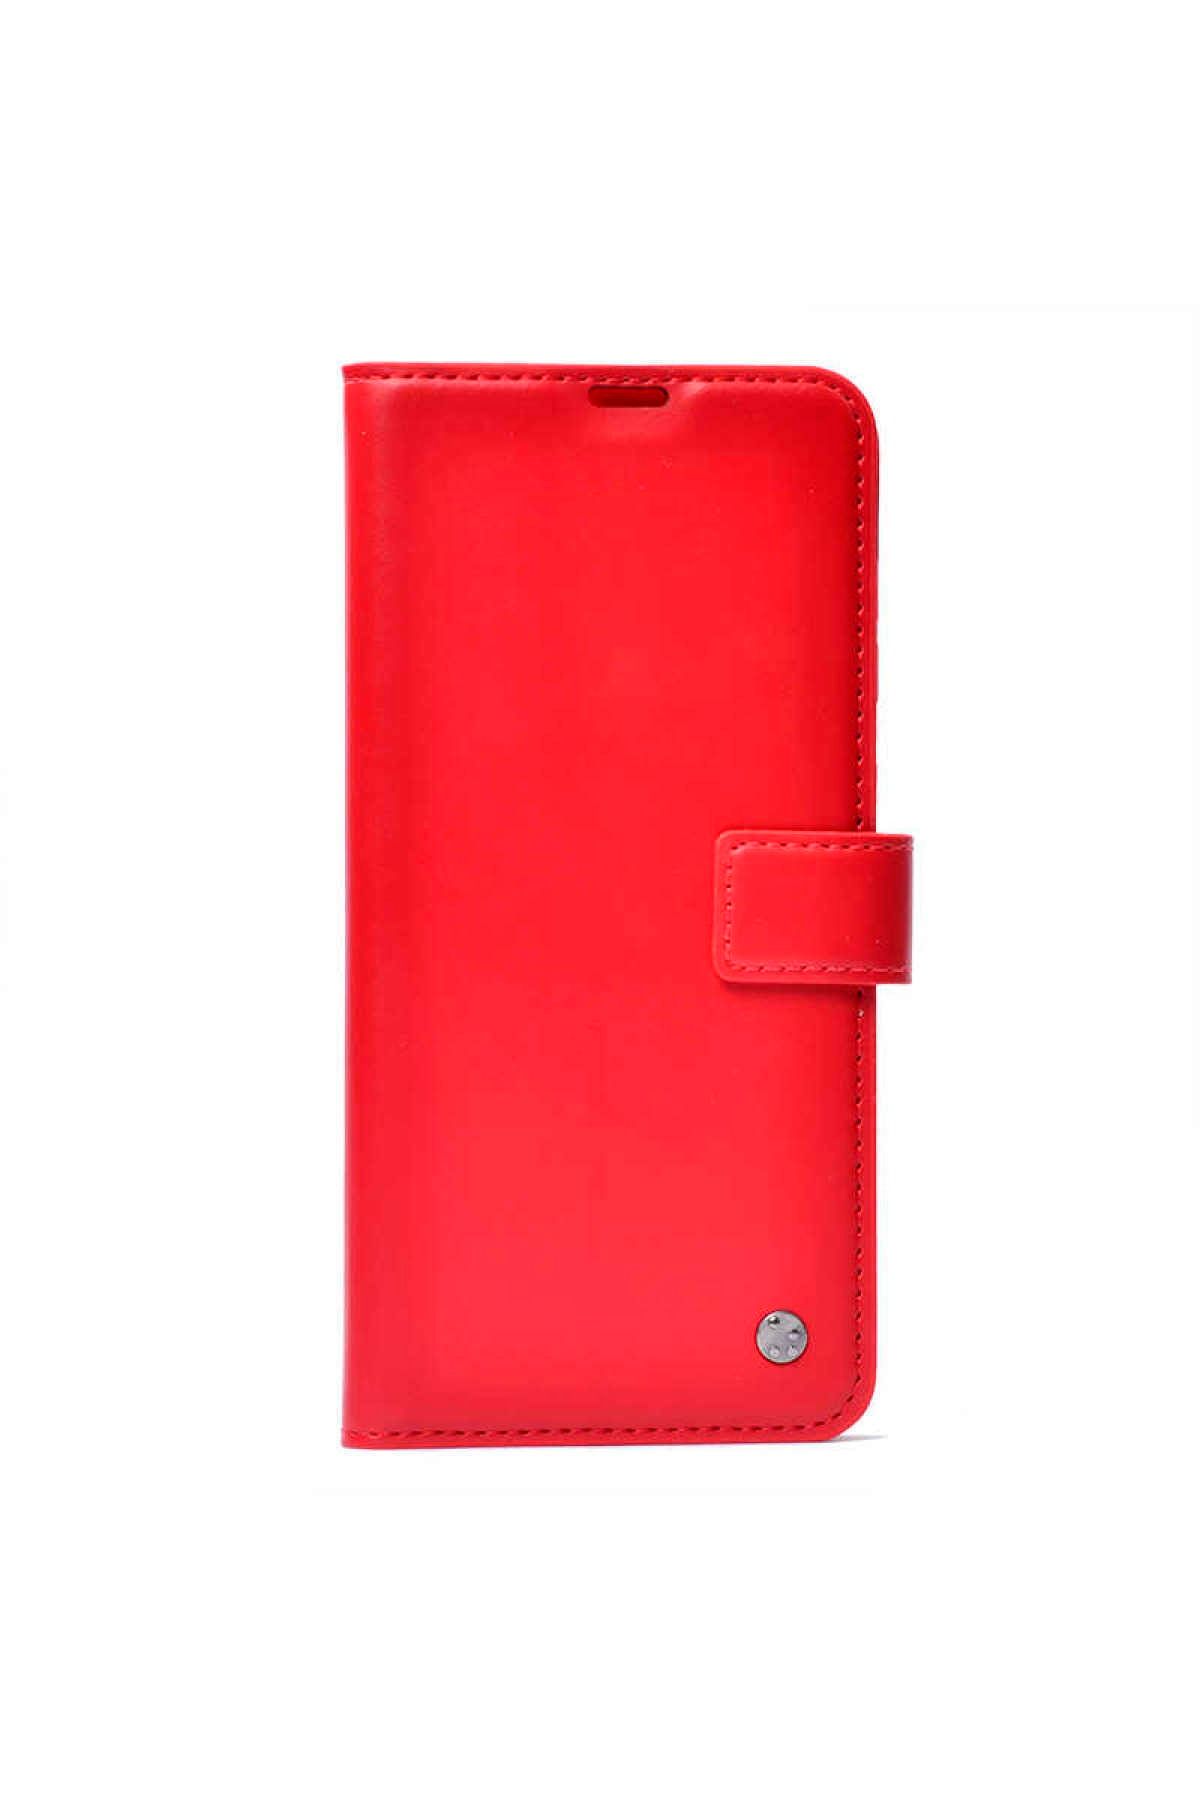 Mobilteam Samsung Galaxy A30 Kılıf Kapaklı Pocketdelux - Kırmızı